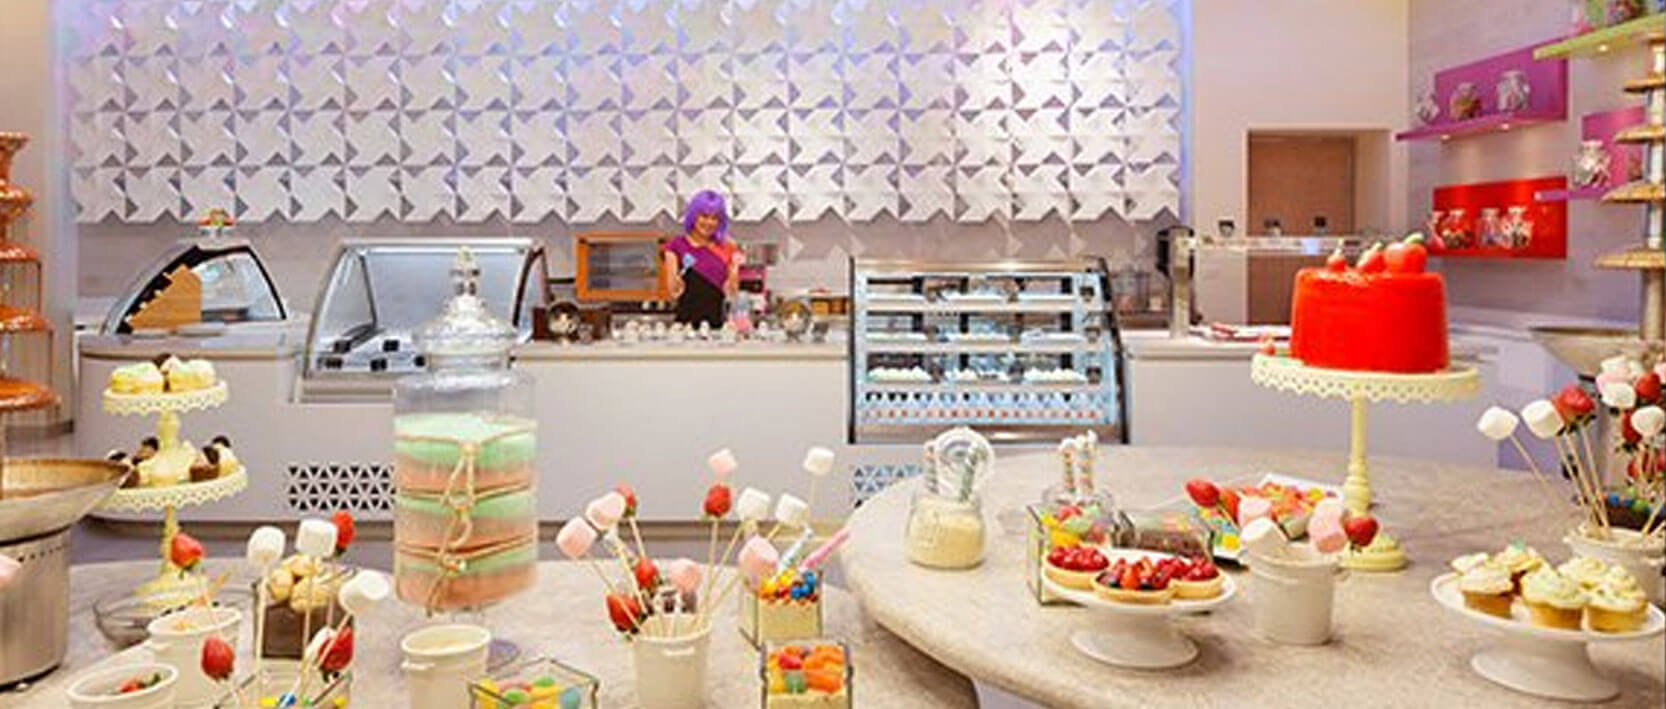 Hyatt Ziva Cancun Restaurants and Bars - Pasteles